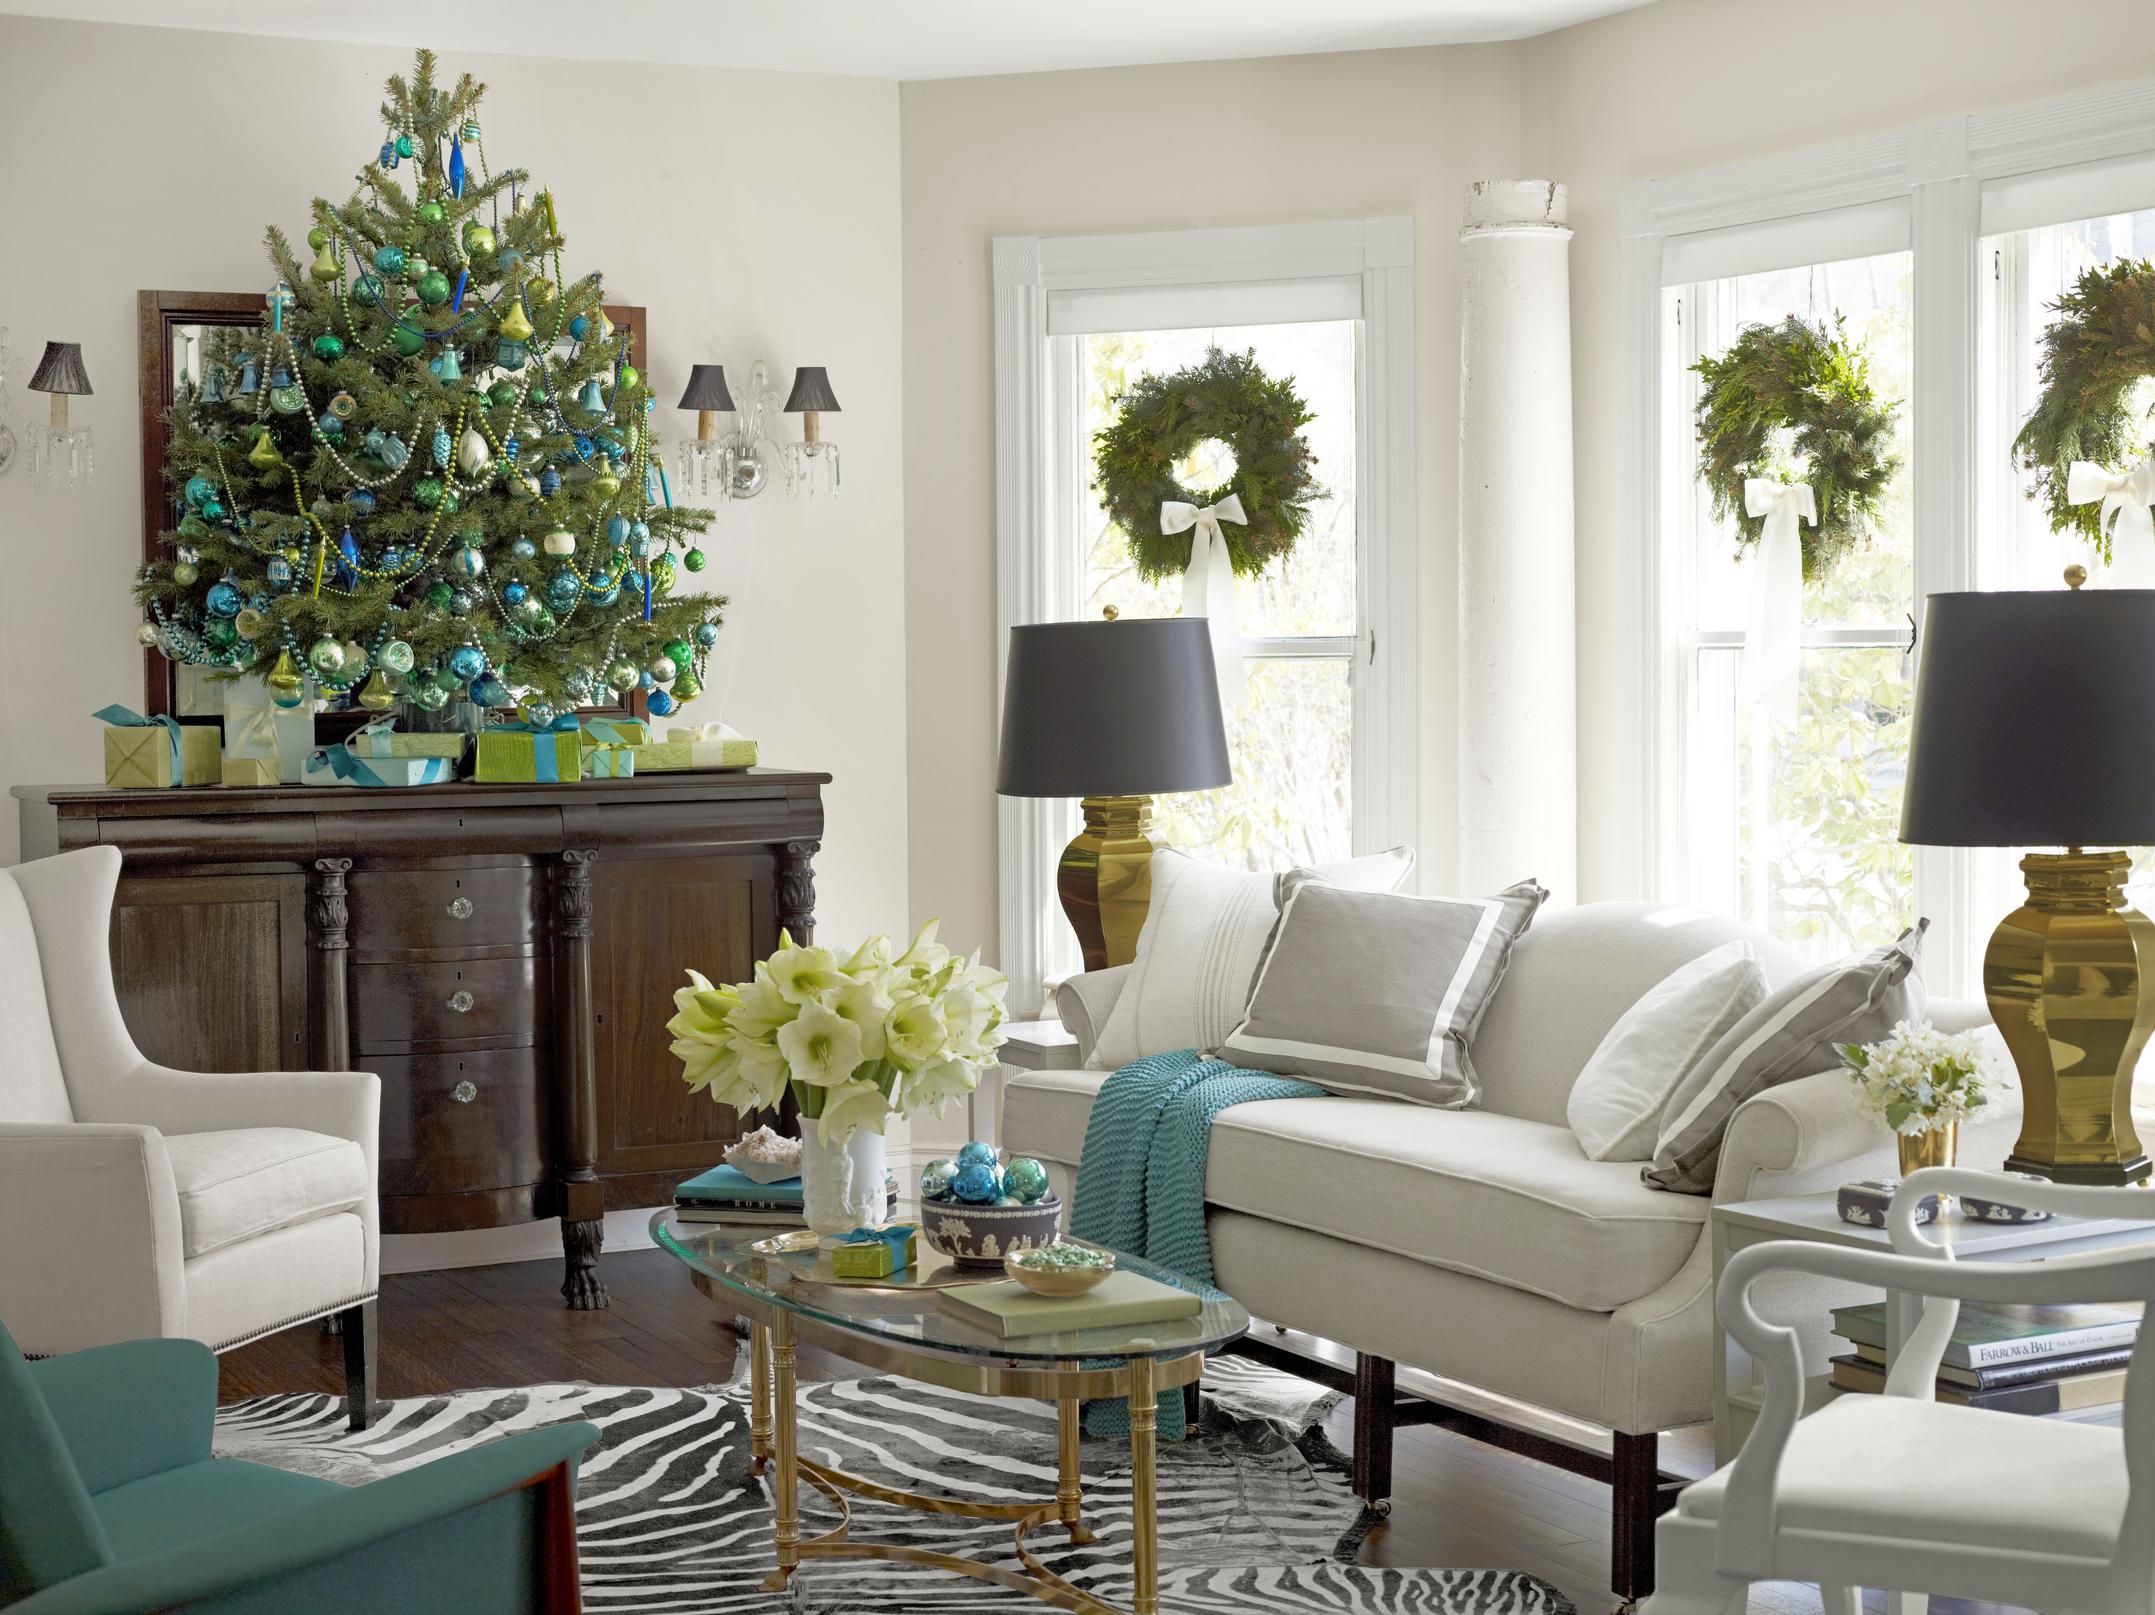 6 Foot Christmas Tree Living Room